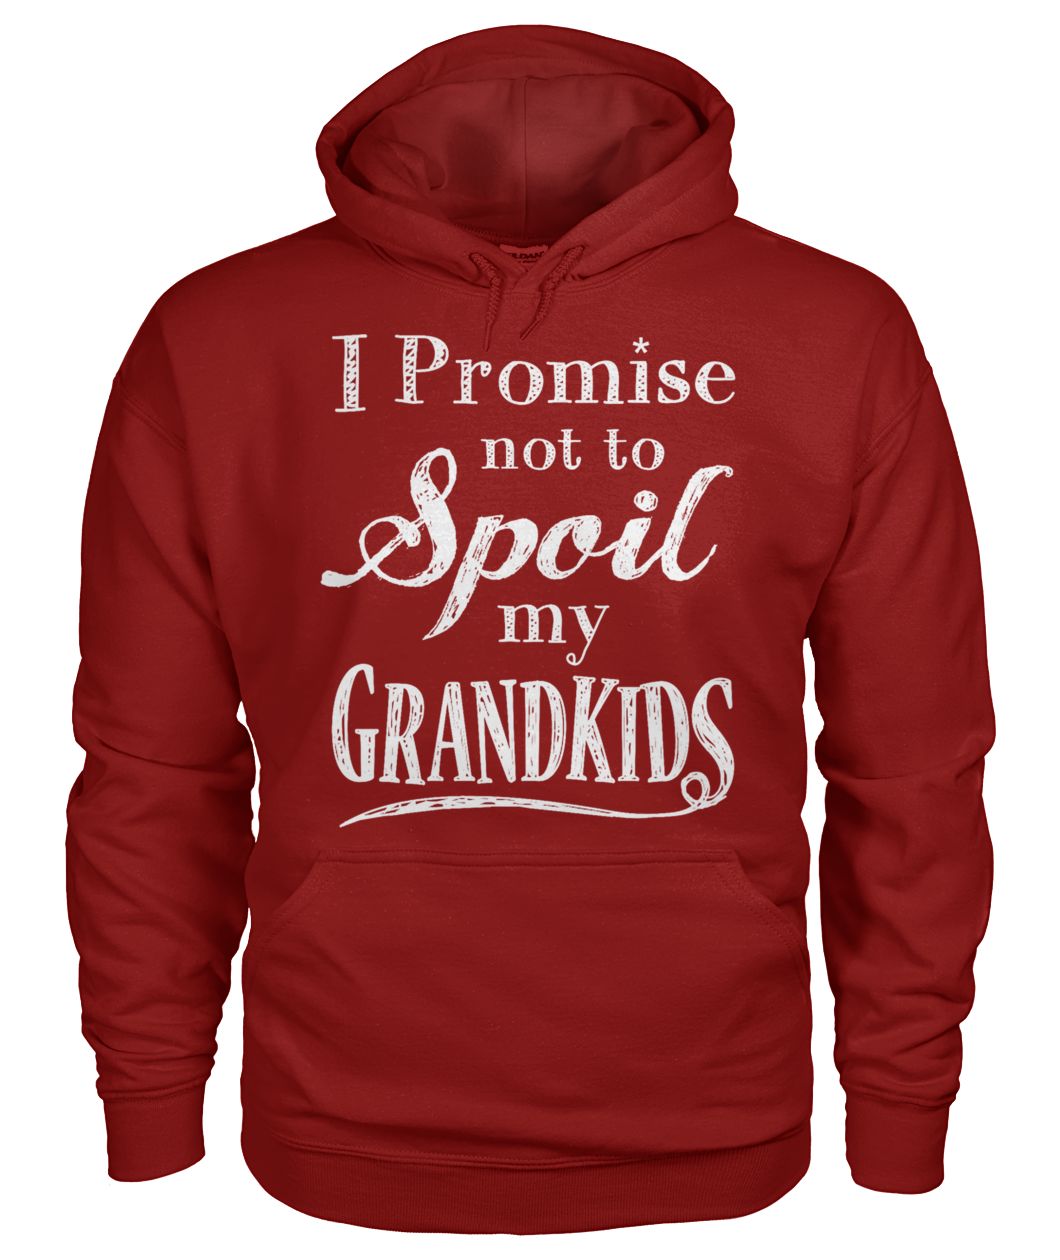 I promise not to spoil my grandkids gildan hoodie